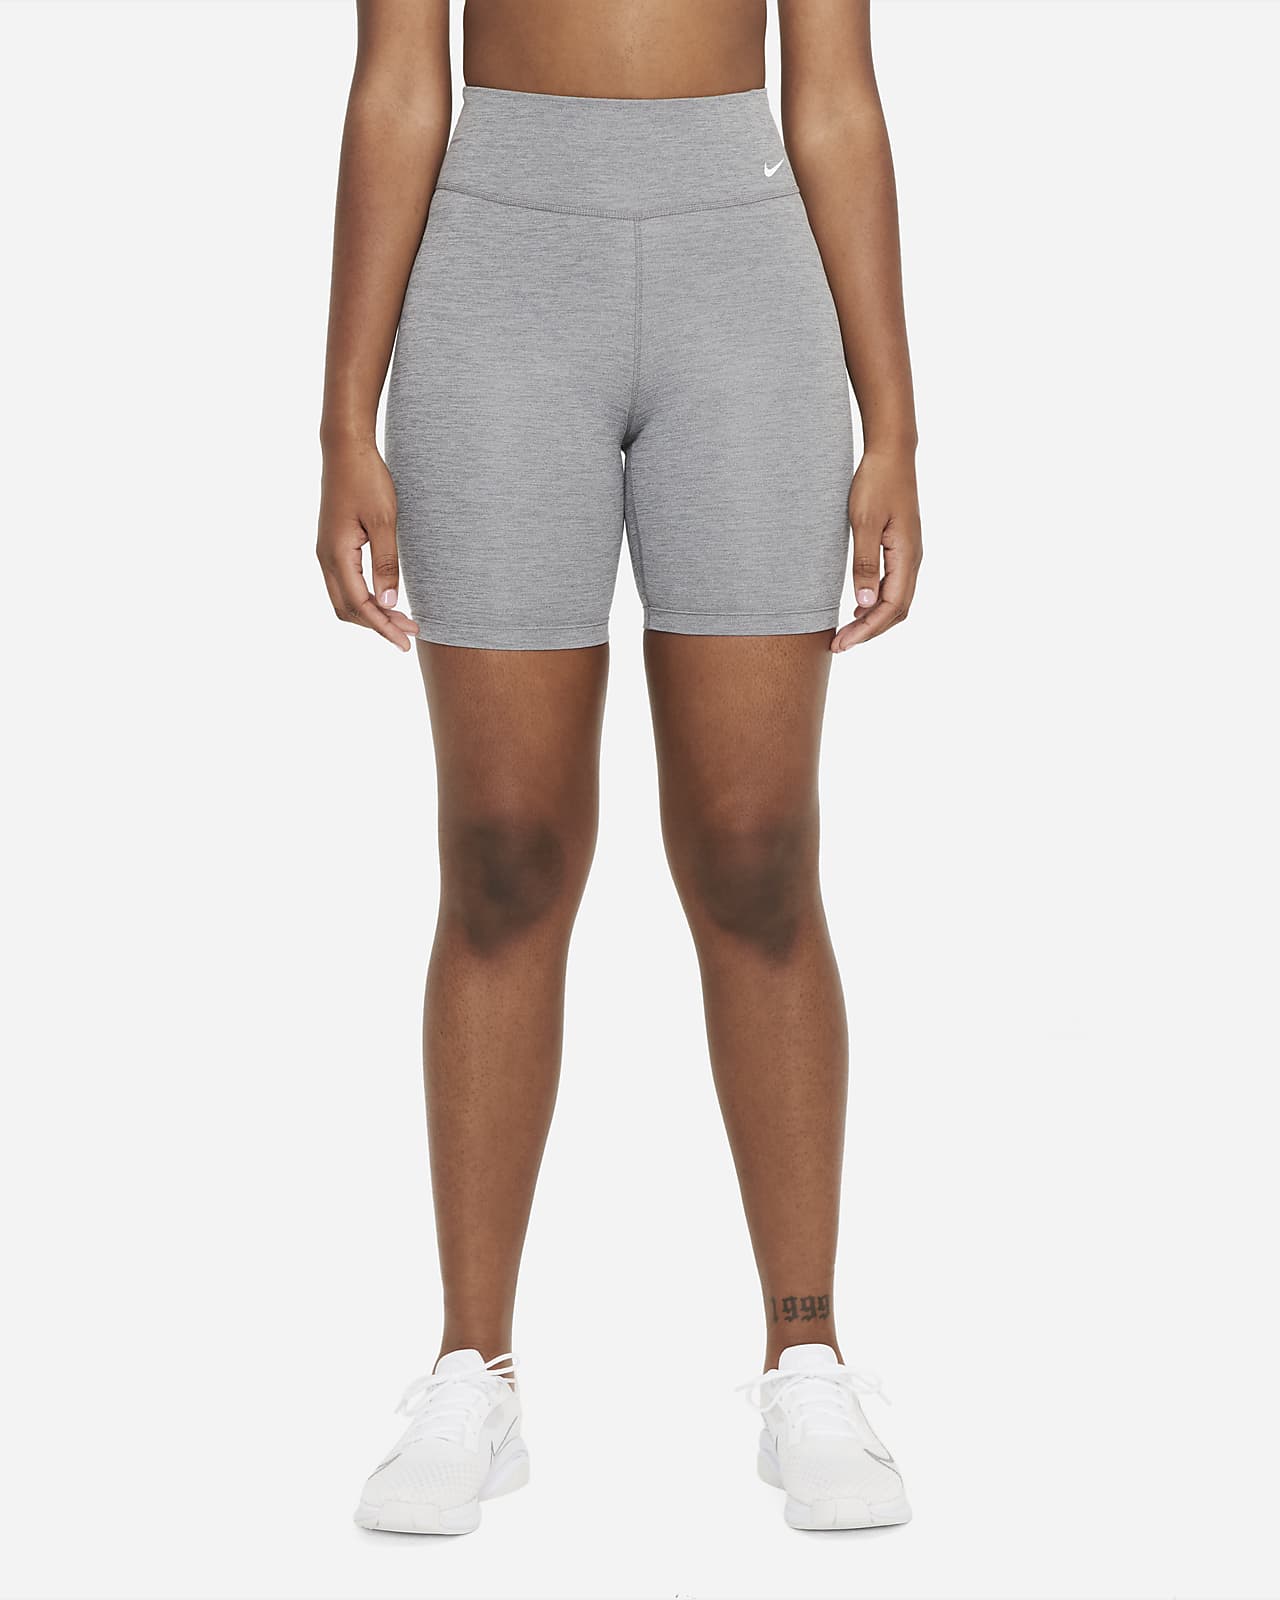 Women's Tight Shorts. Nike CA